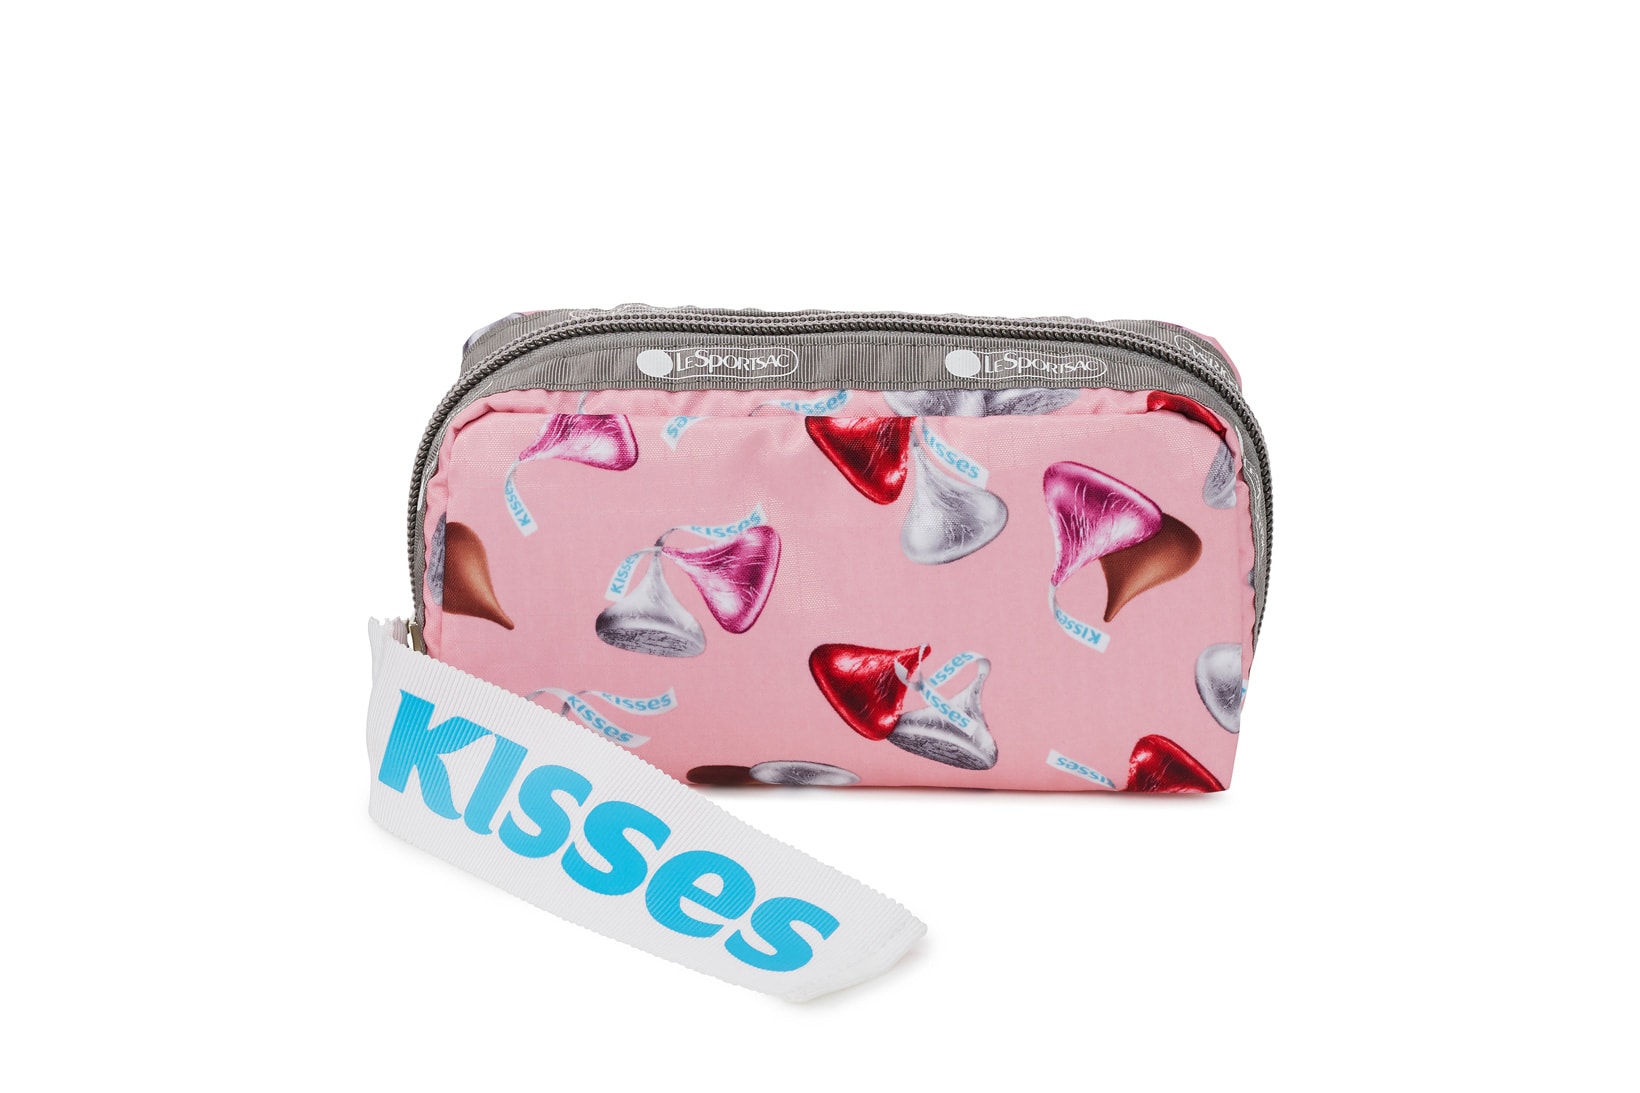 Hershey LeSportsac Kiss Rectangular Cosmetic